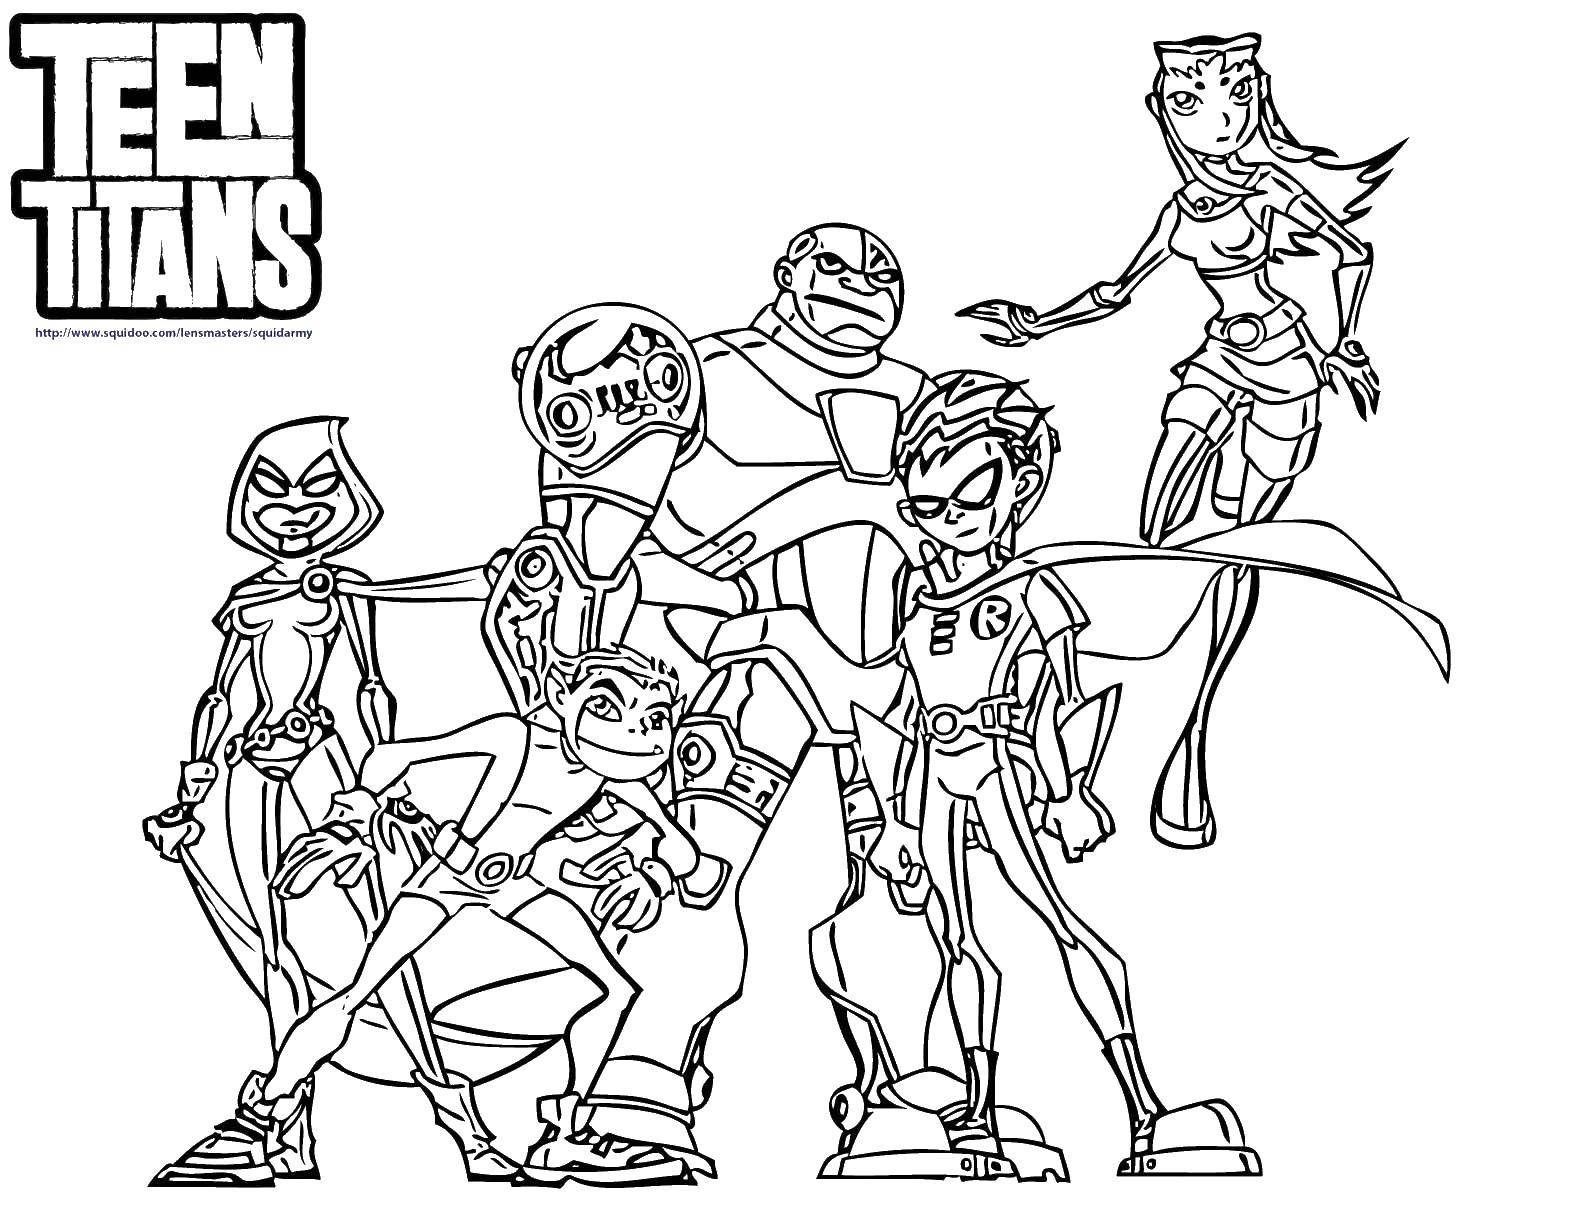 Coloring Teen titans. Category cartoons. Tags:  cartoons, teen titans.